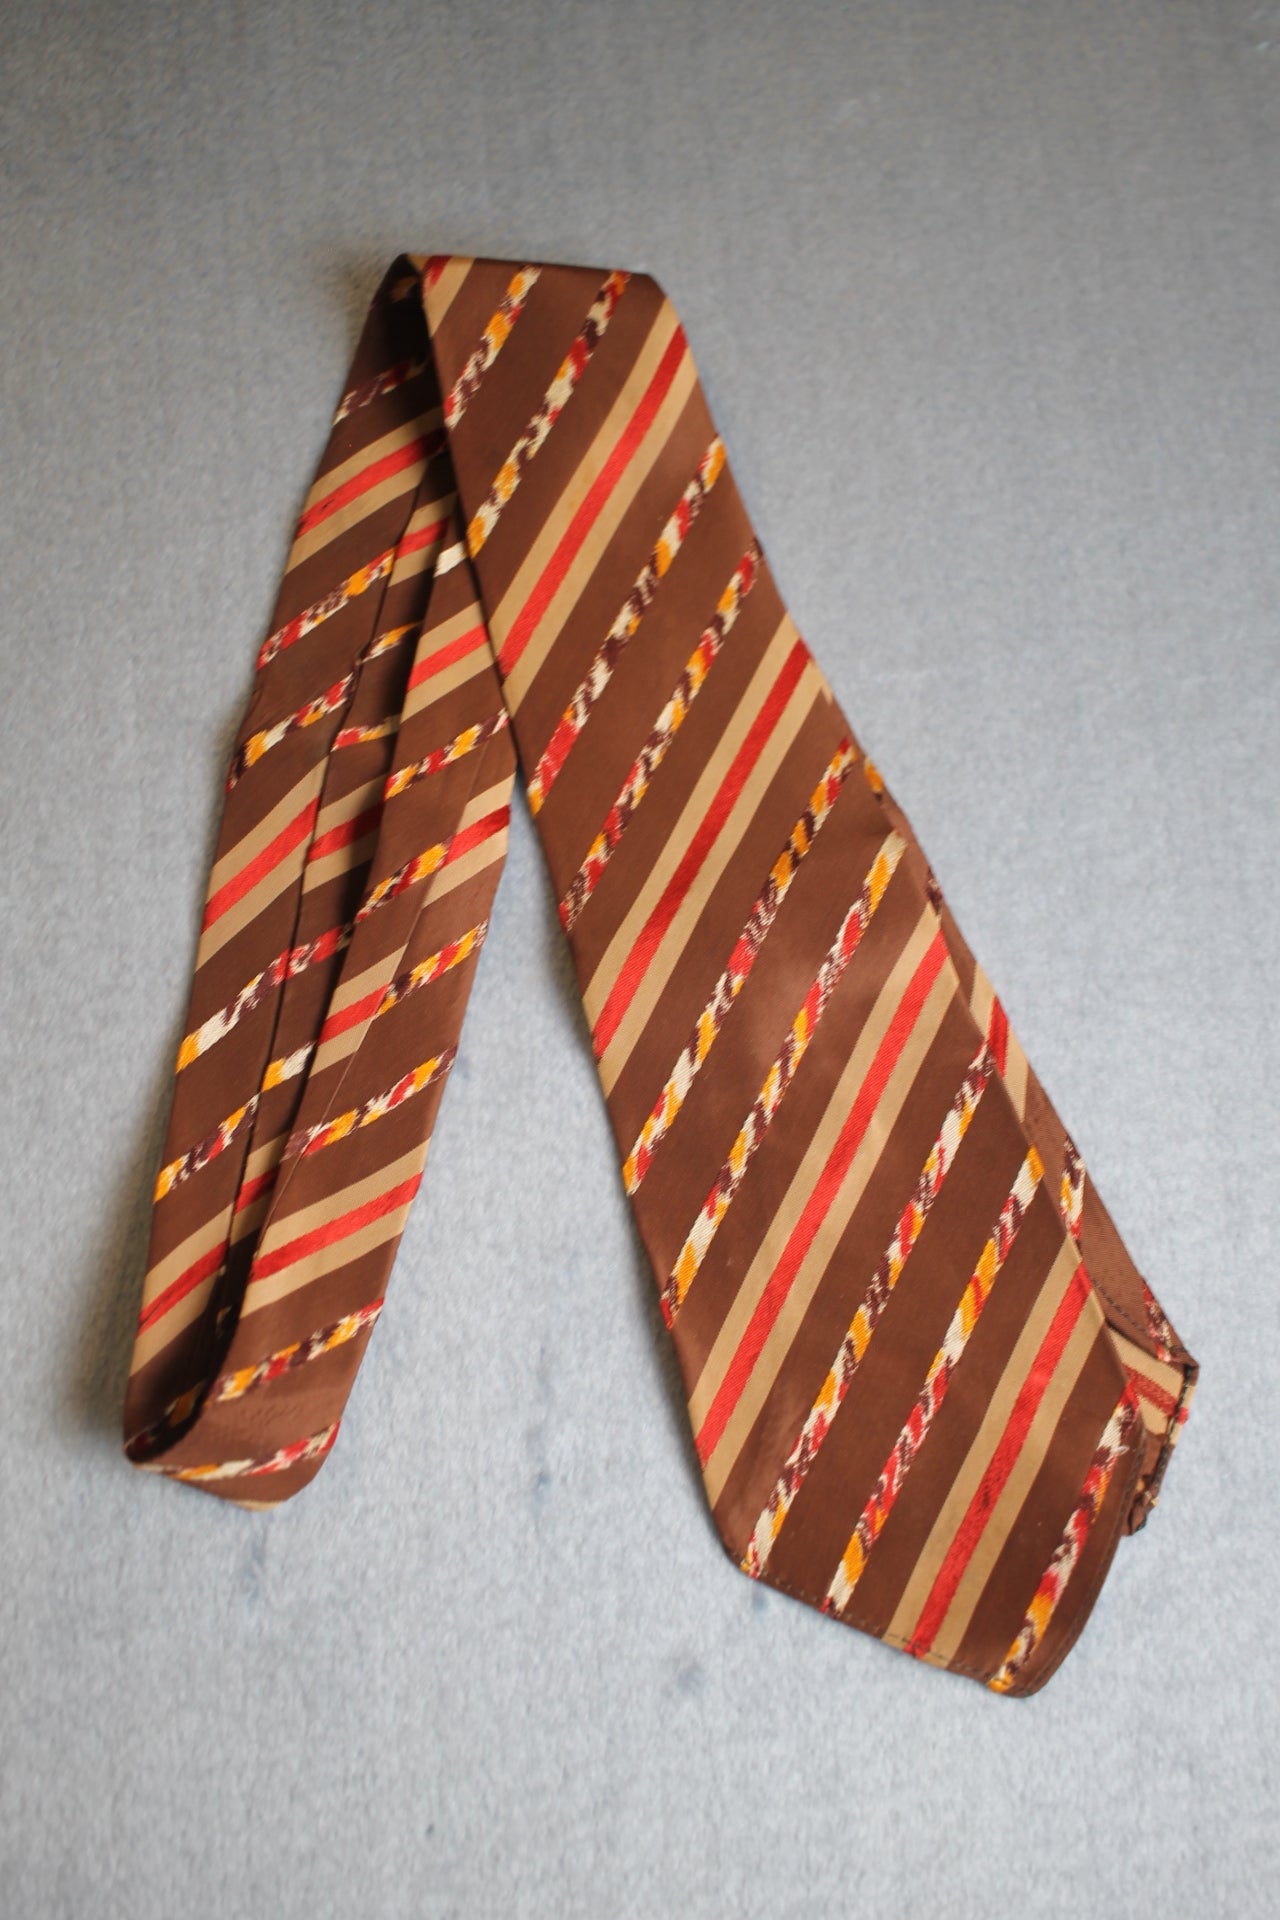 Vintage 1940s/50s 2 tone brown red striped pattern swing tie